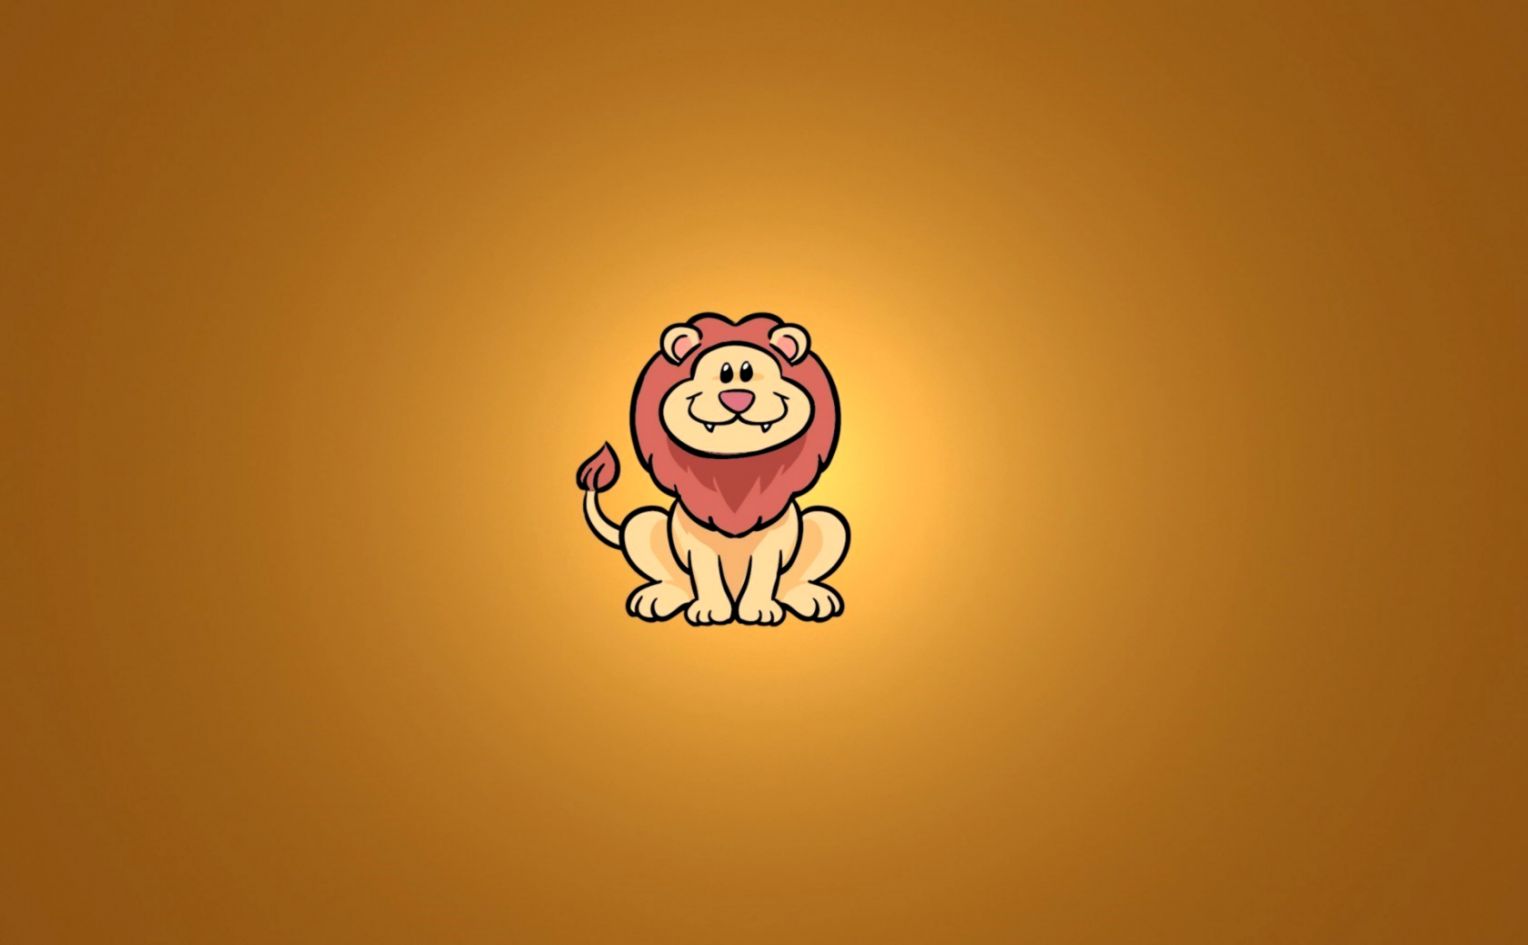 Lion Sitting Smile Minimalism Cartoon 7030043